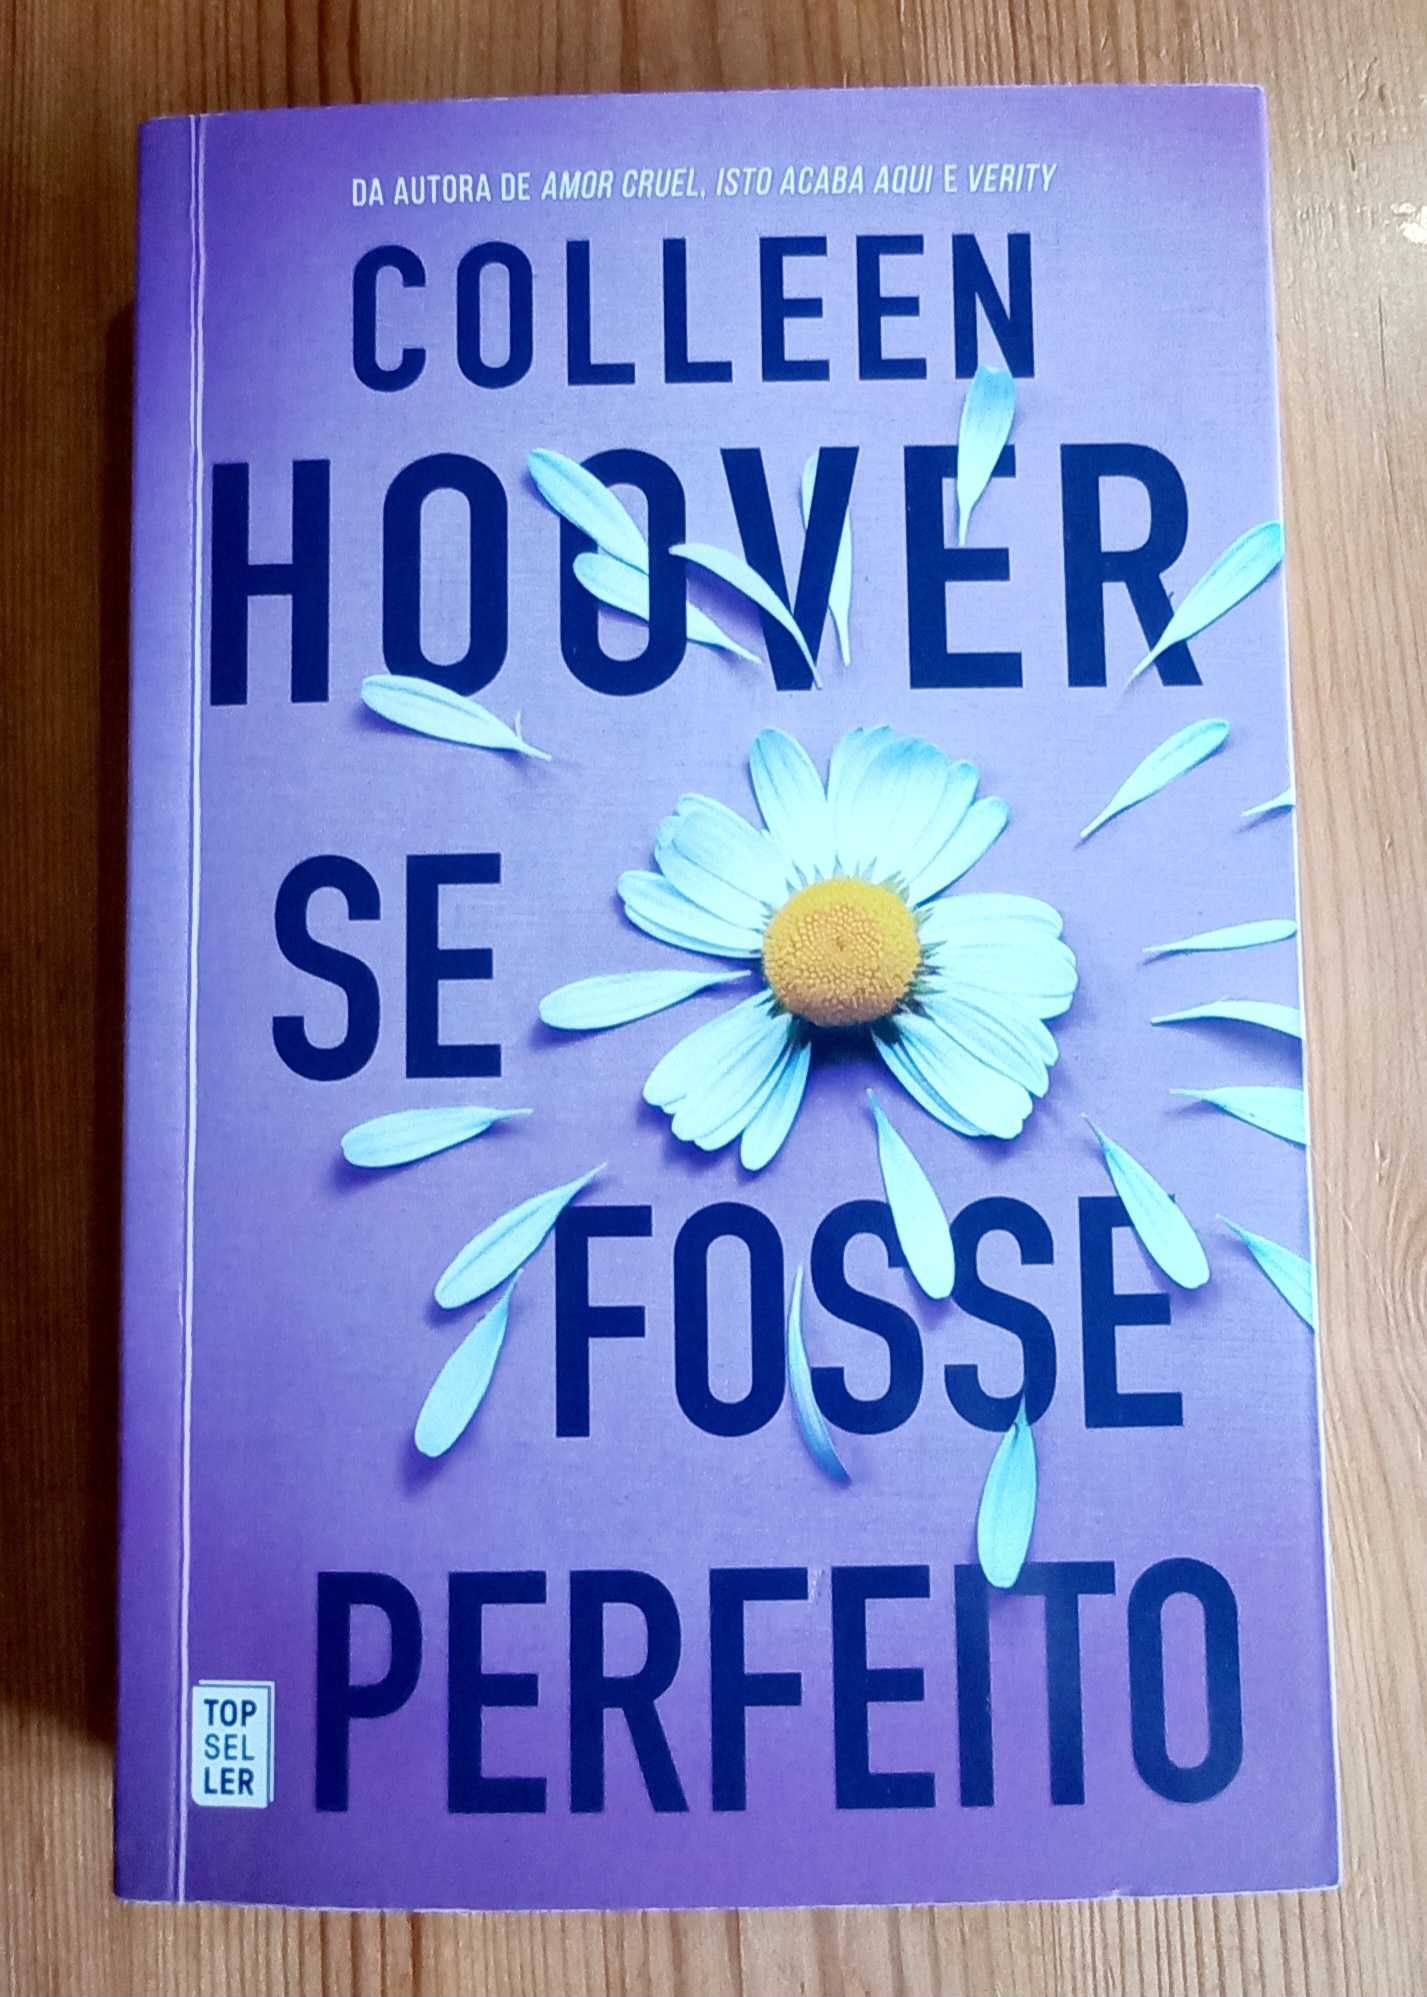 Livro de Colleen Hoover "Se Fosse Perfeito"